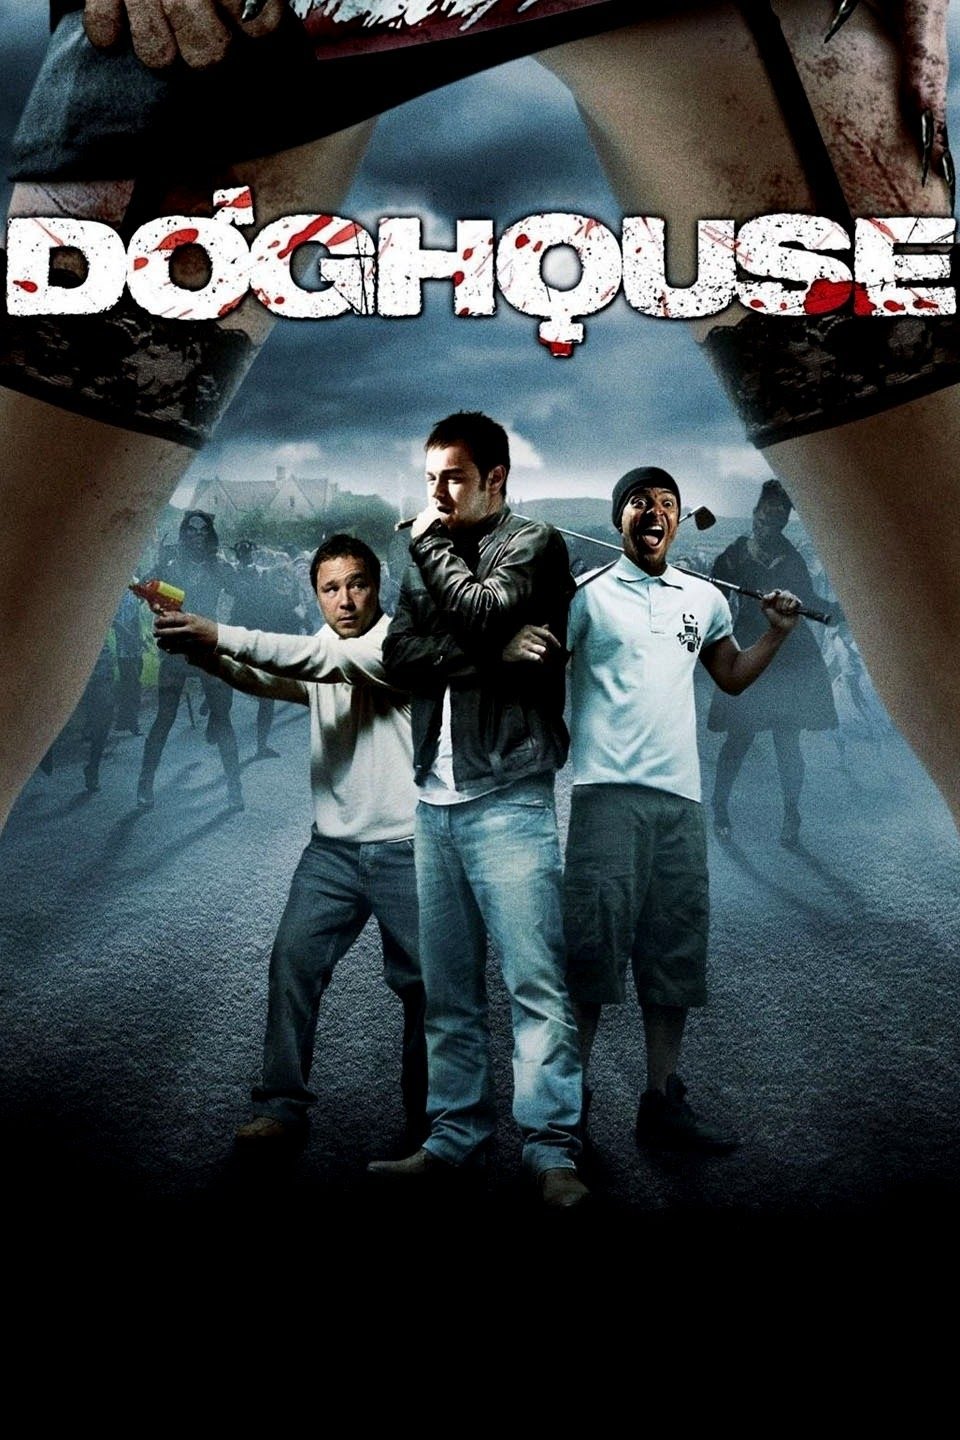 Doghouse [Sub-ITA] (2009)